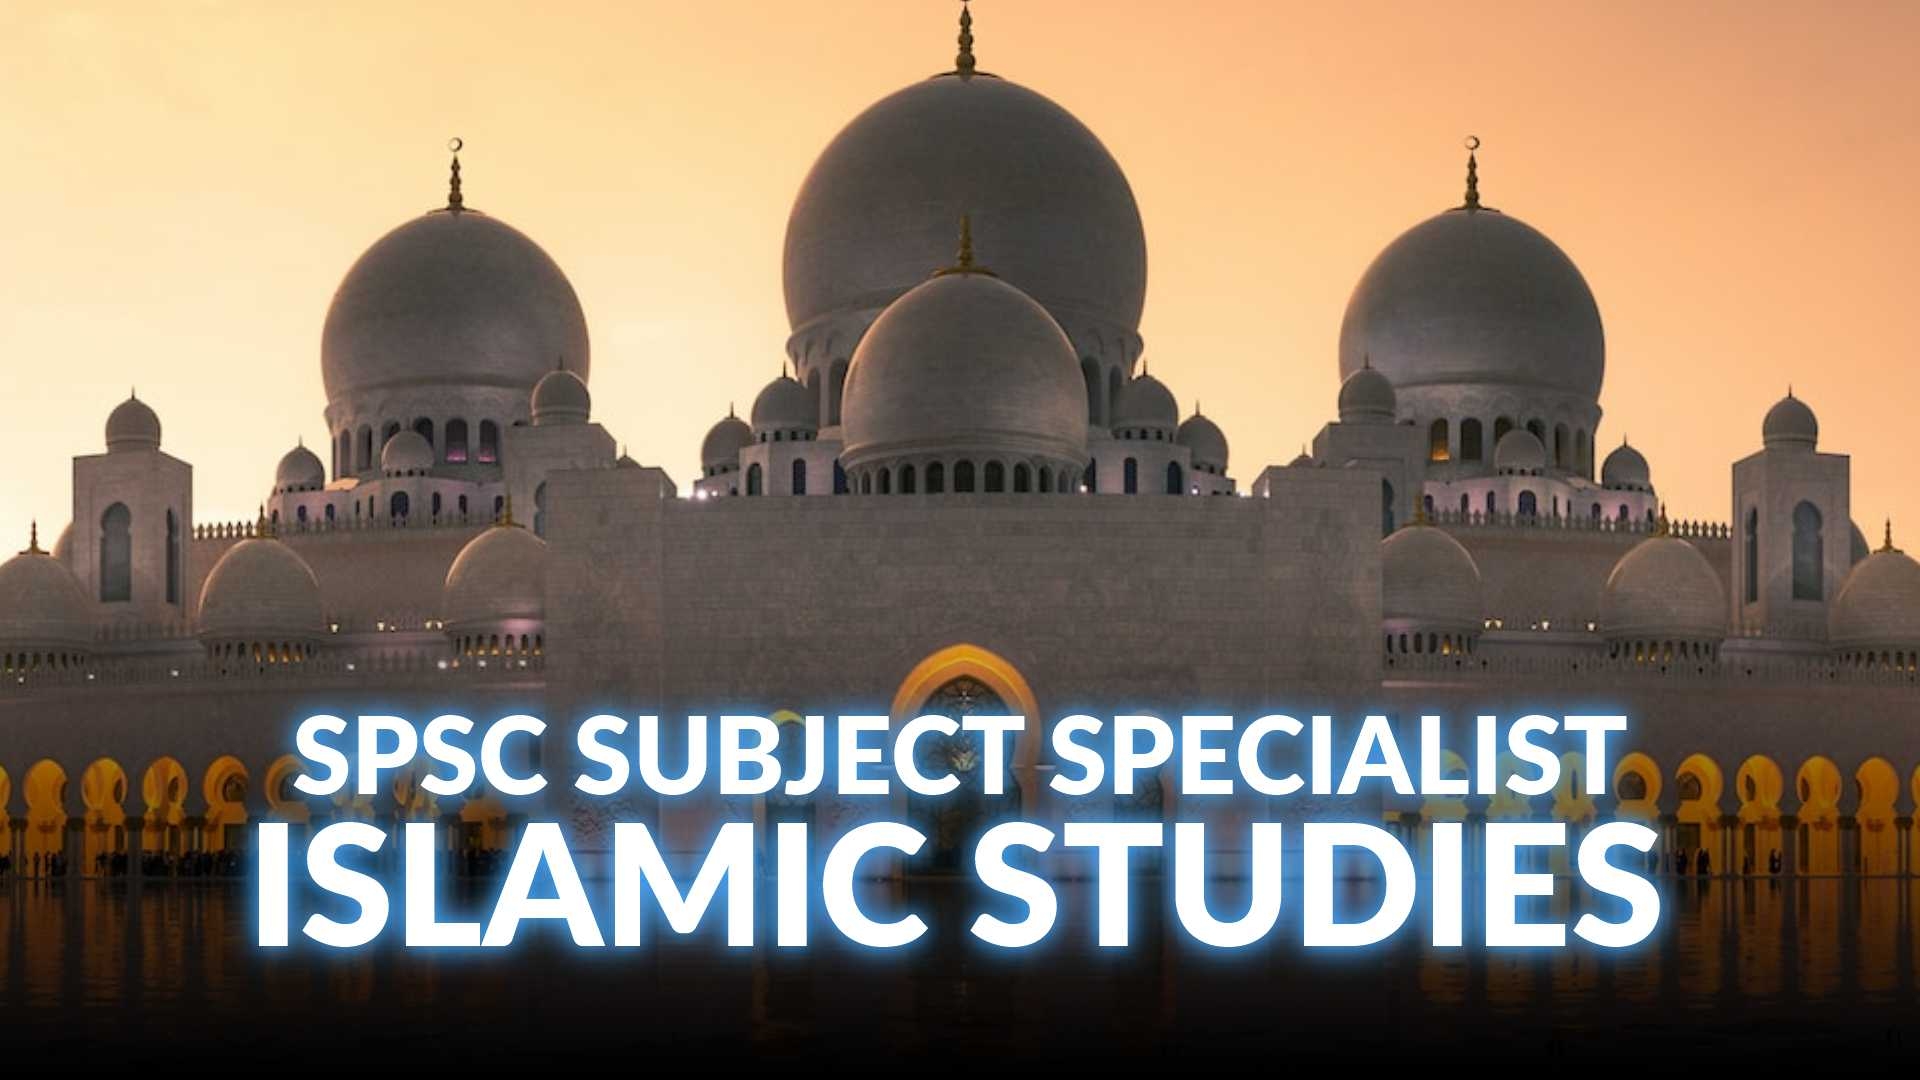 SPSC Subject Specialist Islamic Studies Course